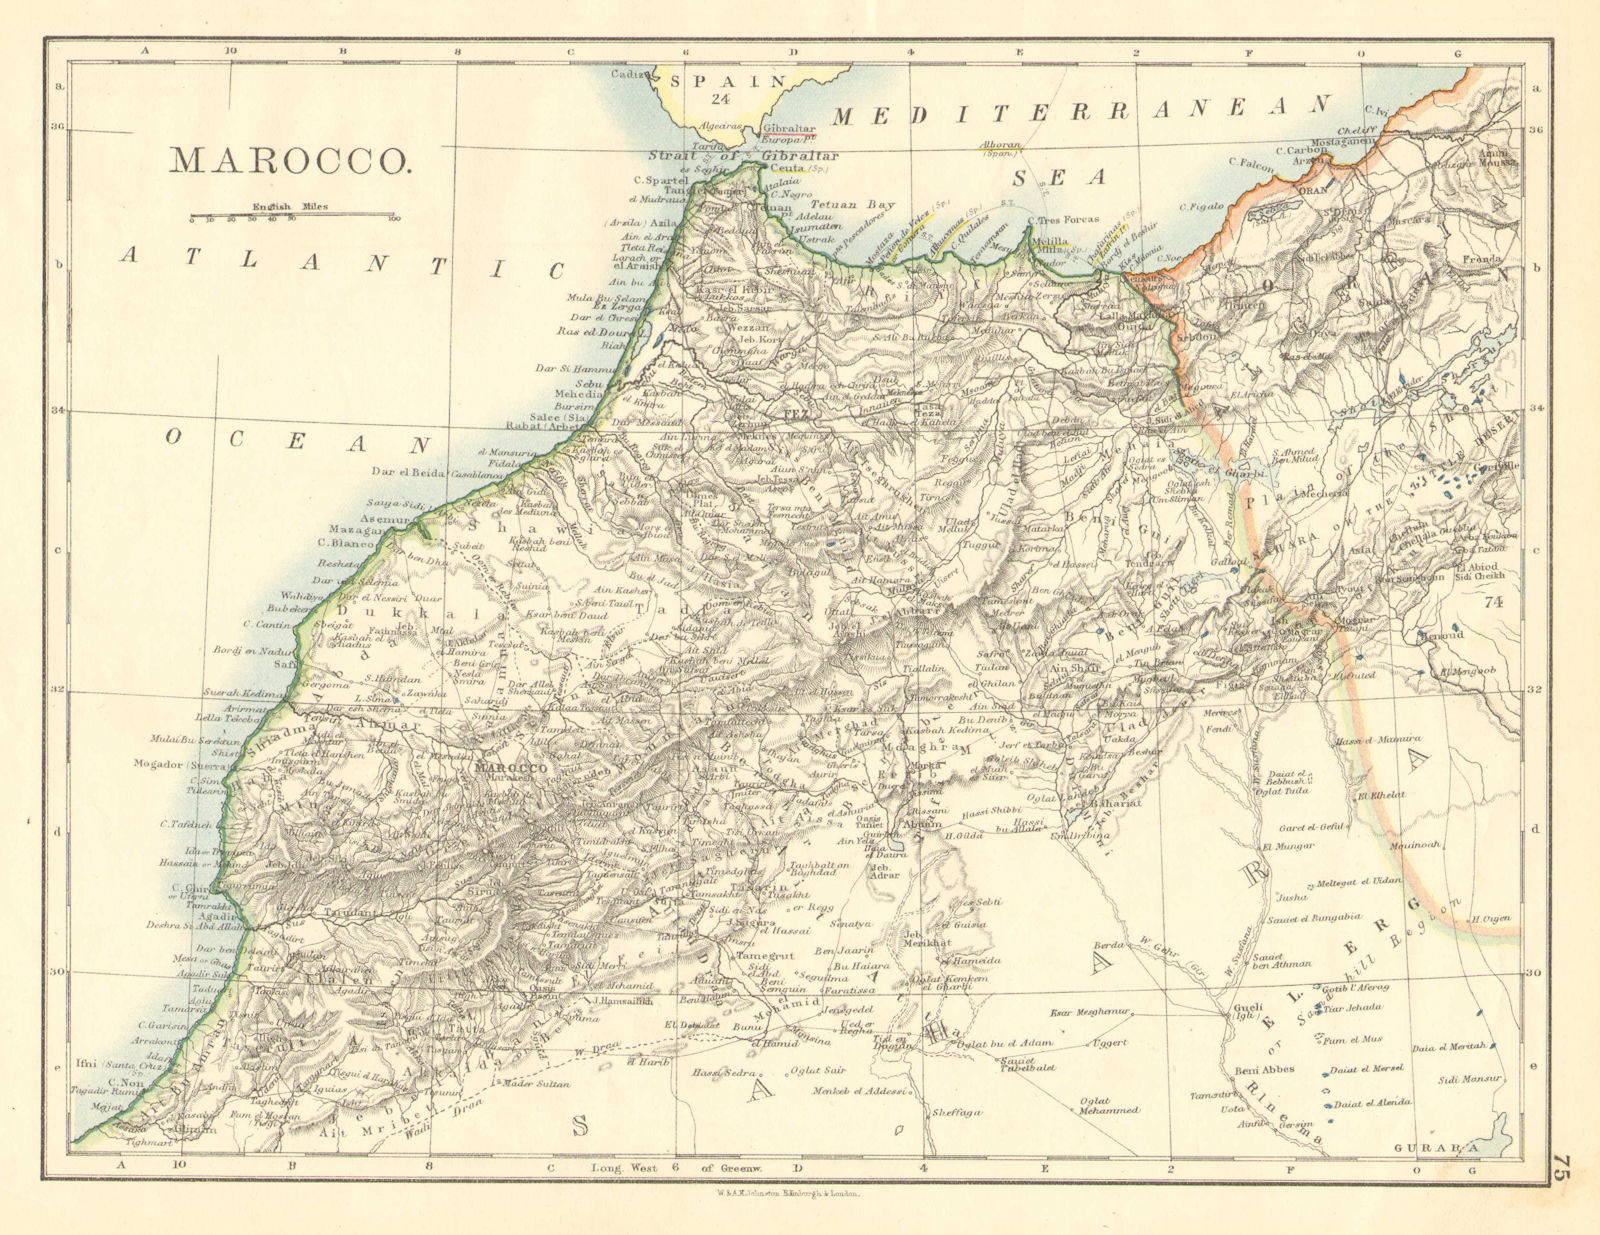 MOROCCO. Showing Atlas mountains rivers towns. Marrakech. JOHNSTON 1899 map